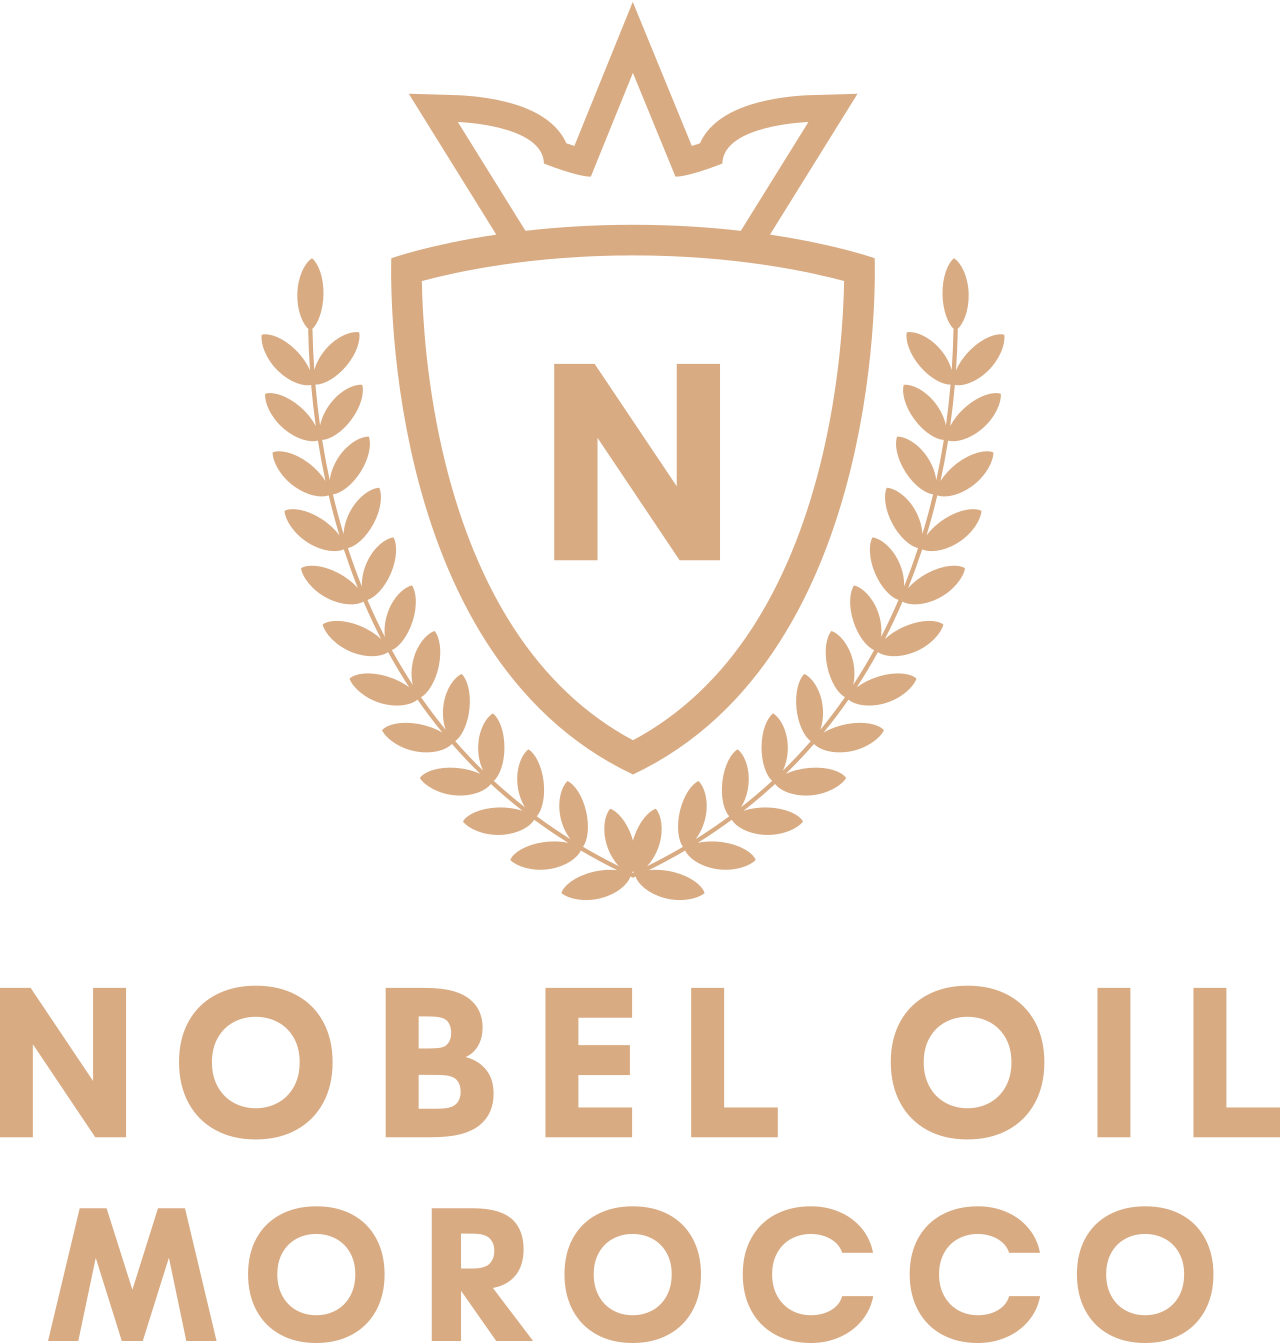 NOBEL OIL's web page